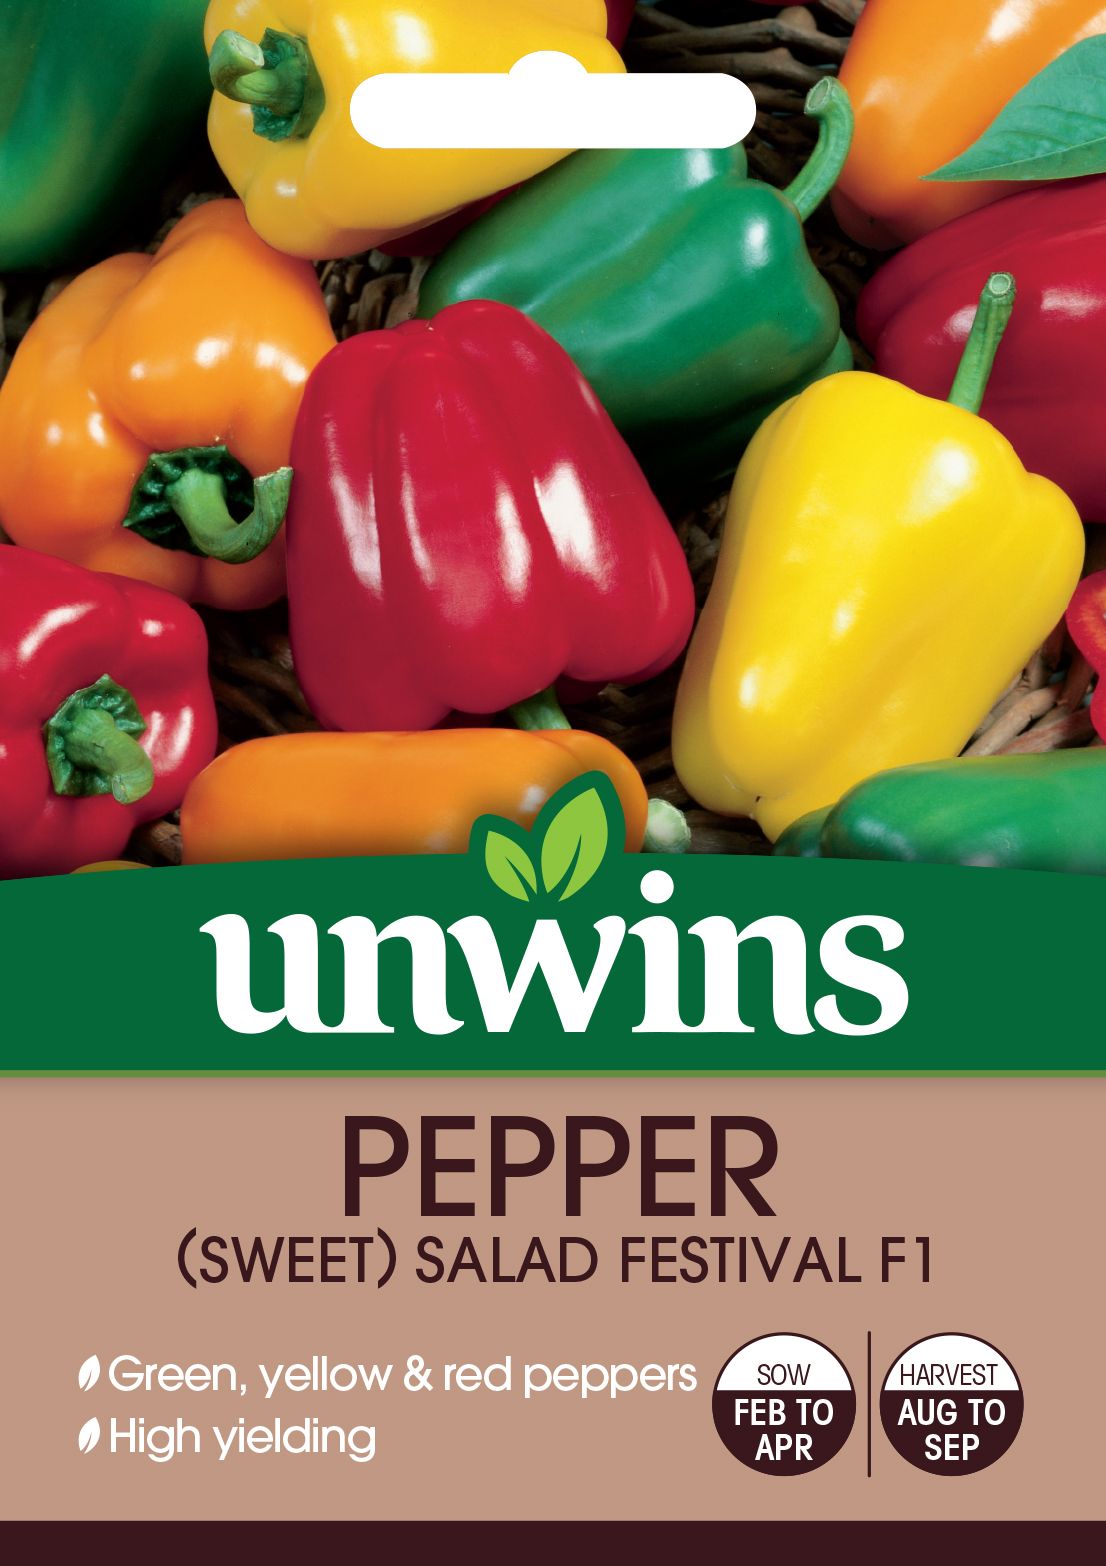 Pepper (Sweet) Salad Festival F1